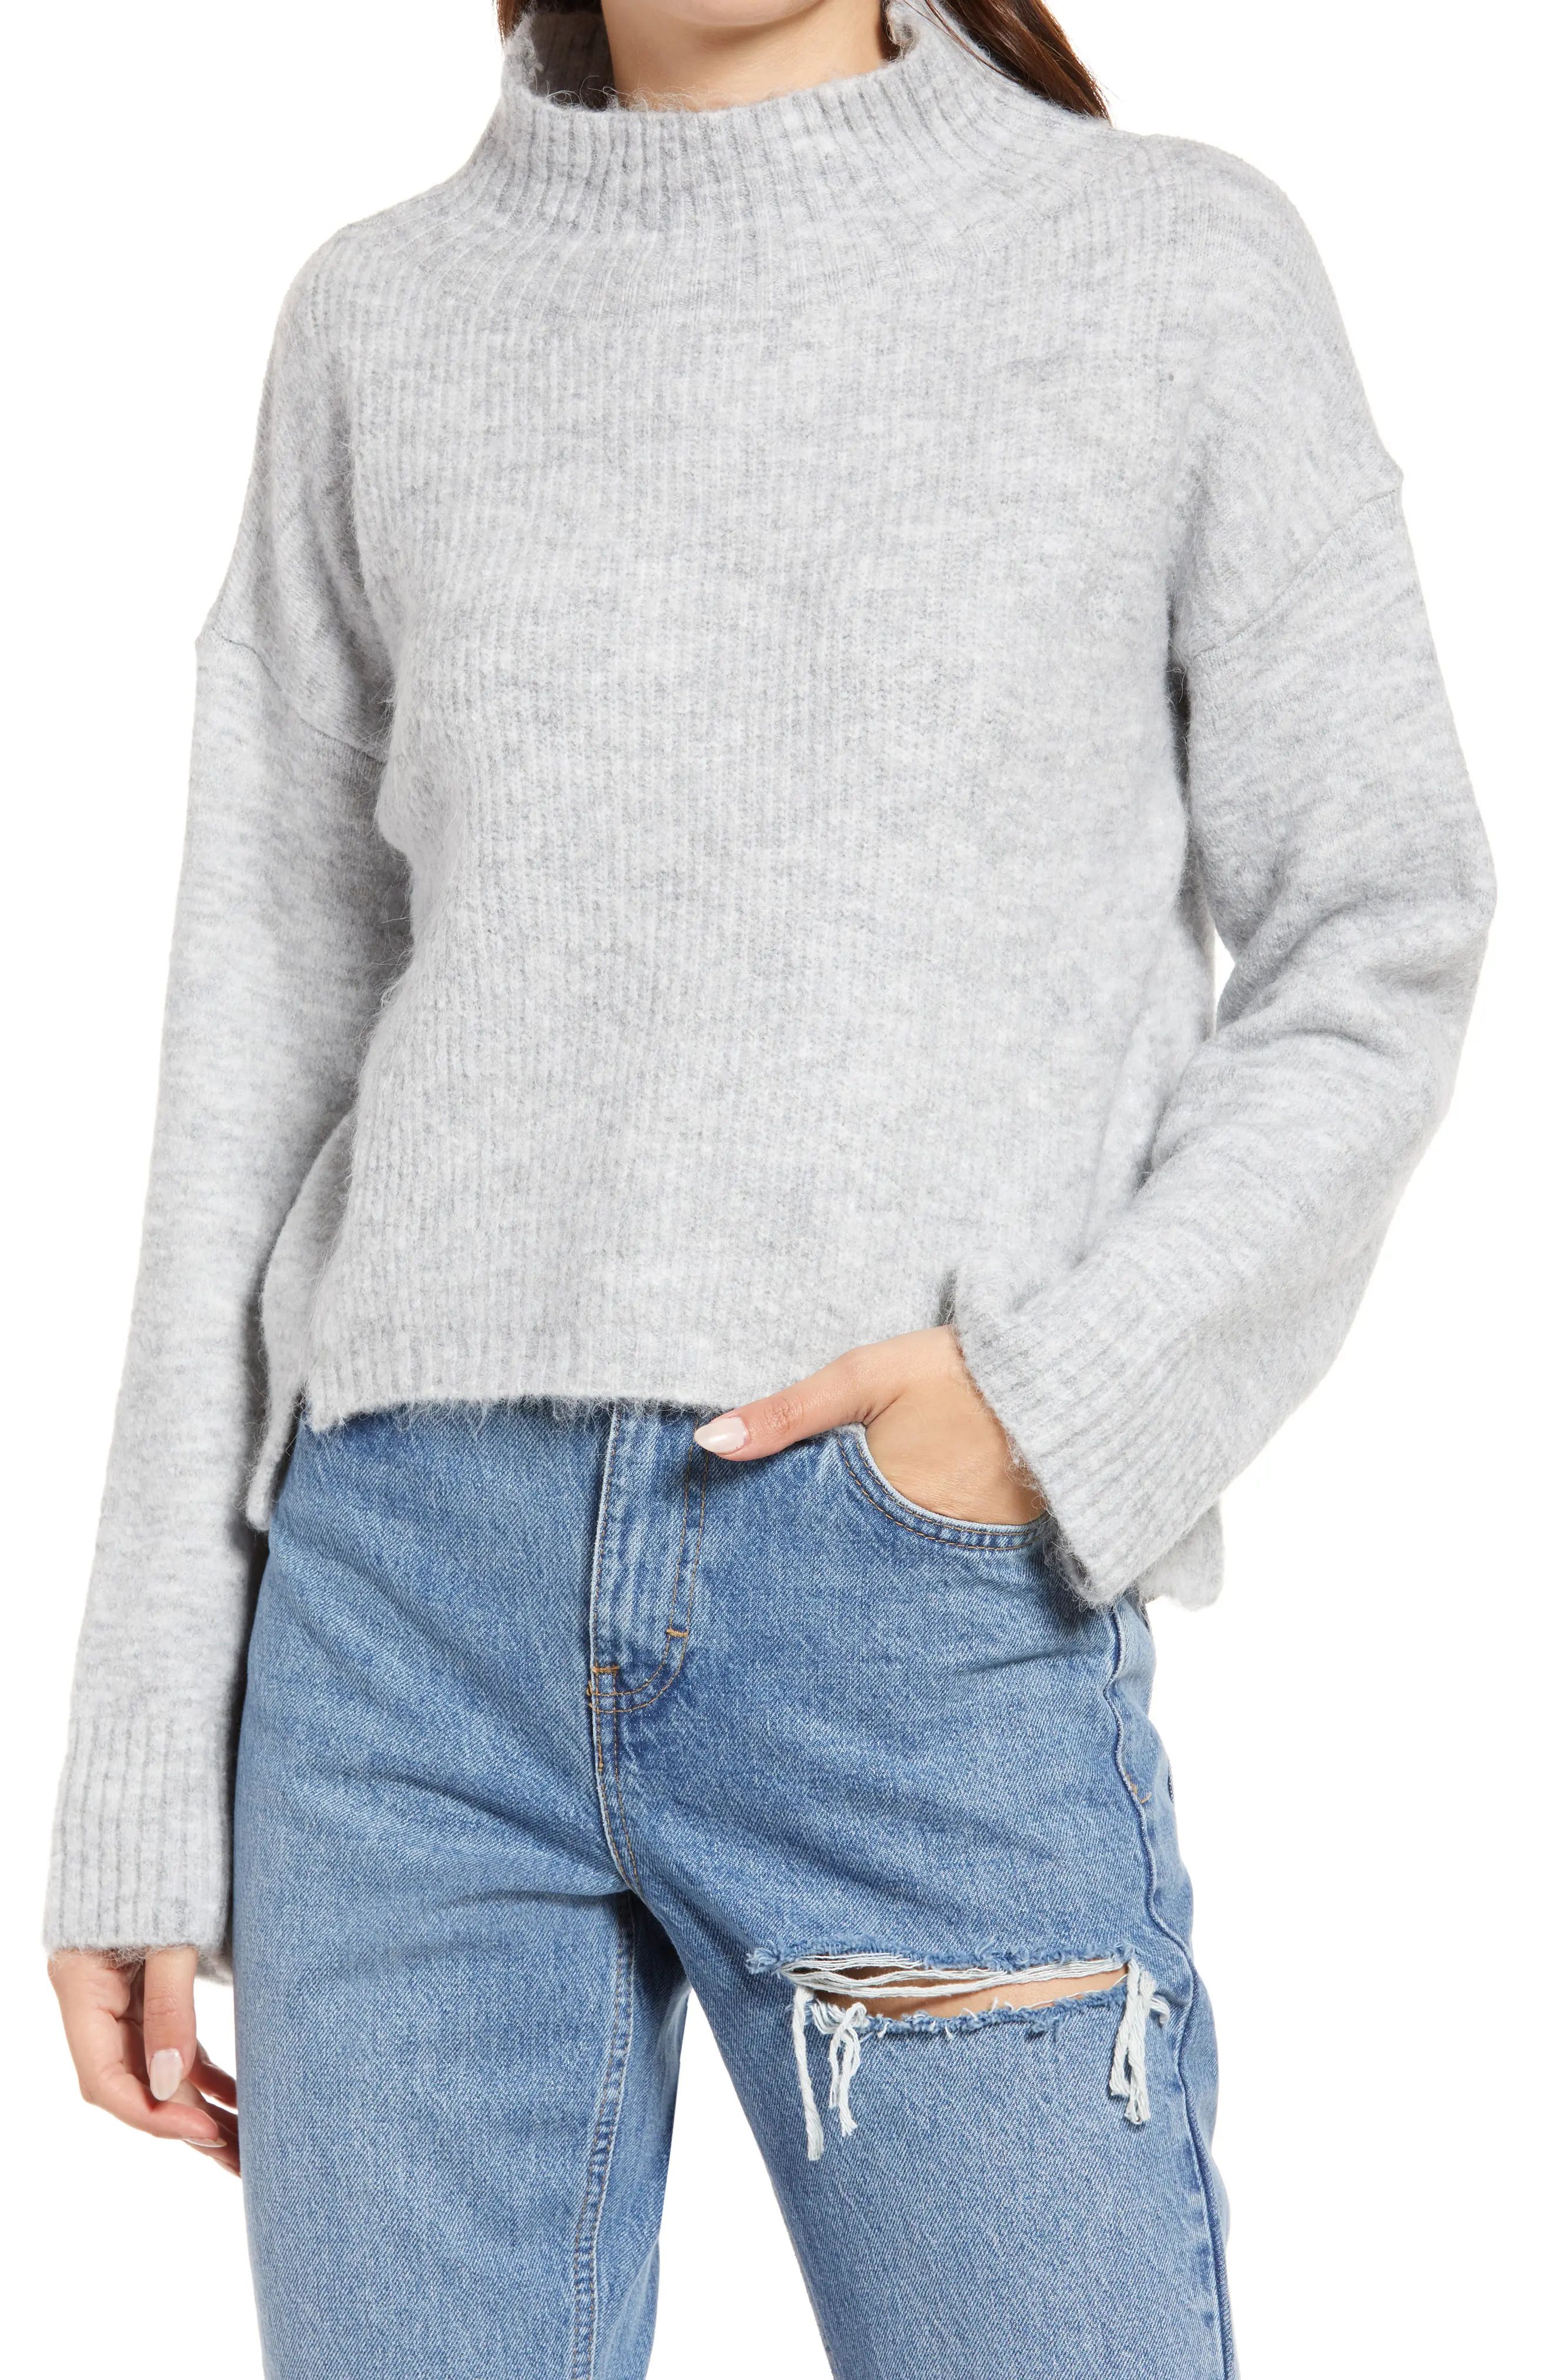 Topshop Mock Neck Crop Sweater in Grey at Nordstrom, Size X-Large | Nordstrom